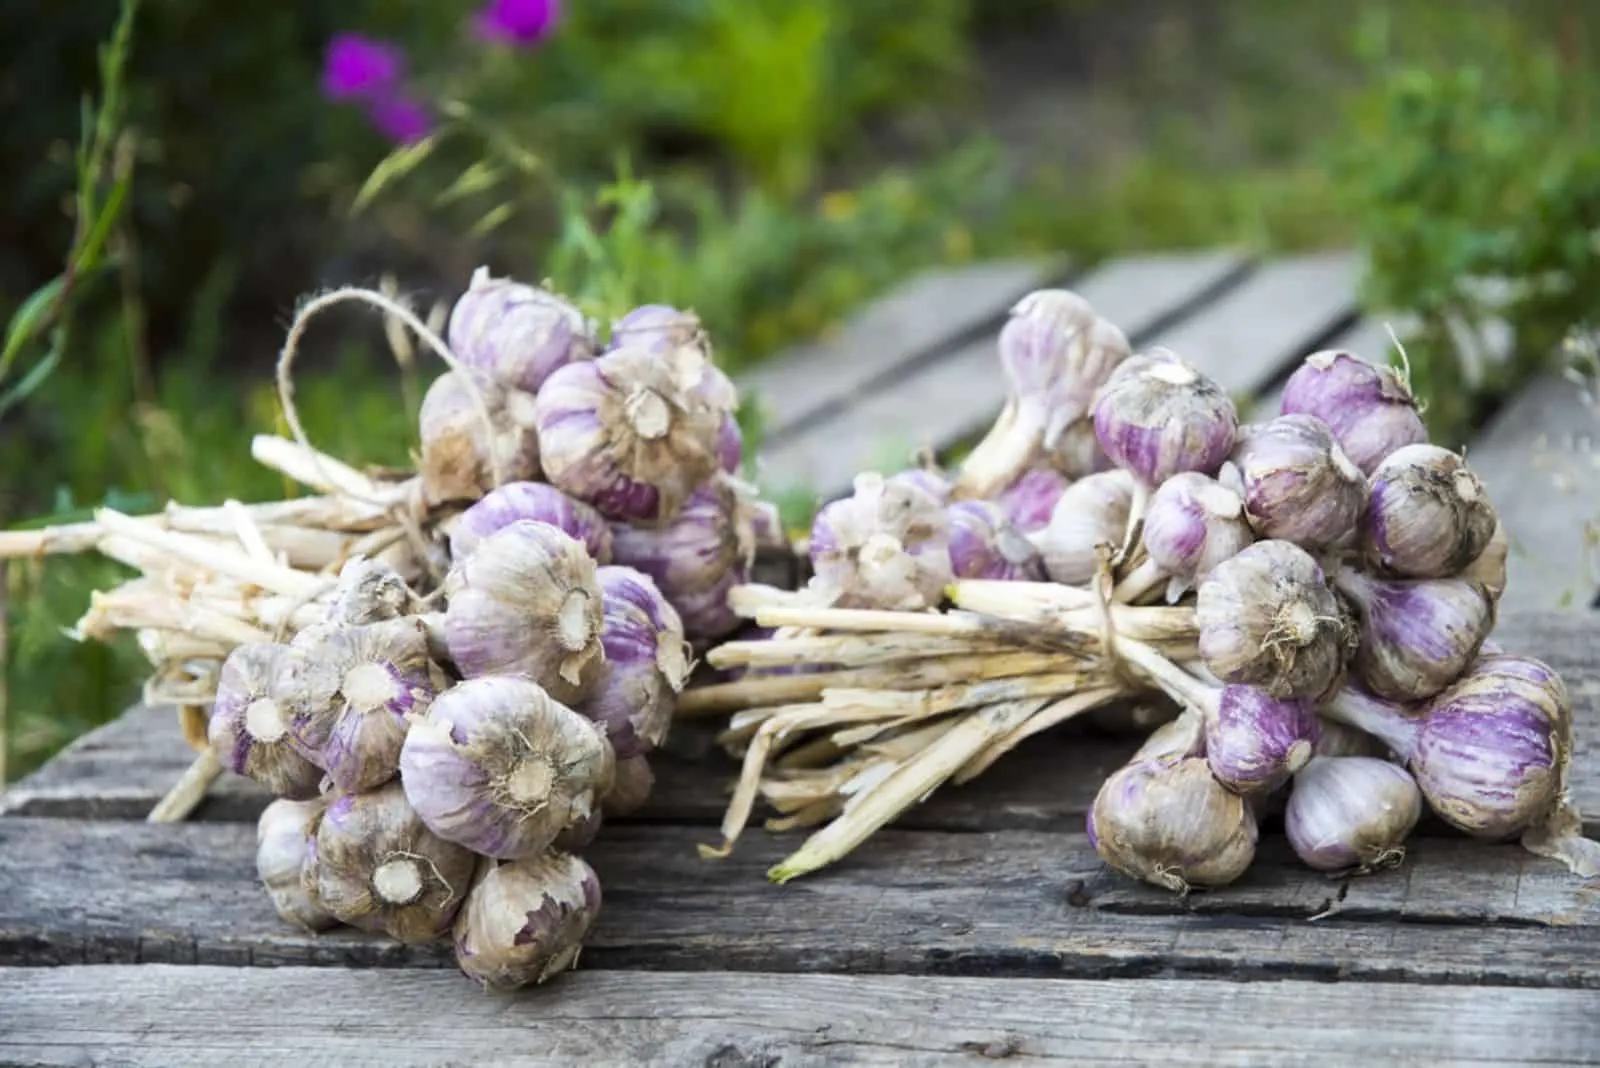 Harvest of garlic in the bundle.